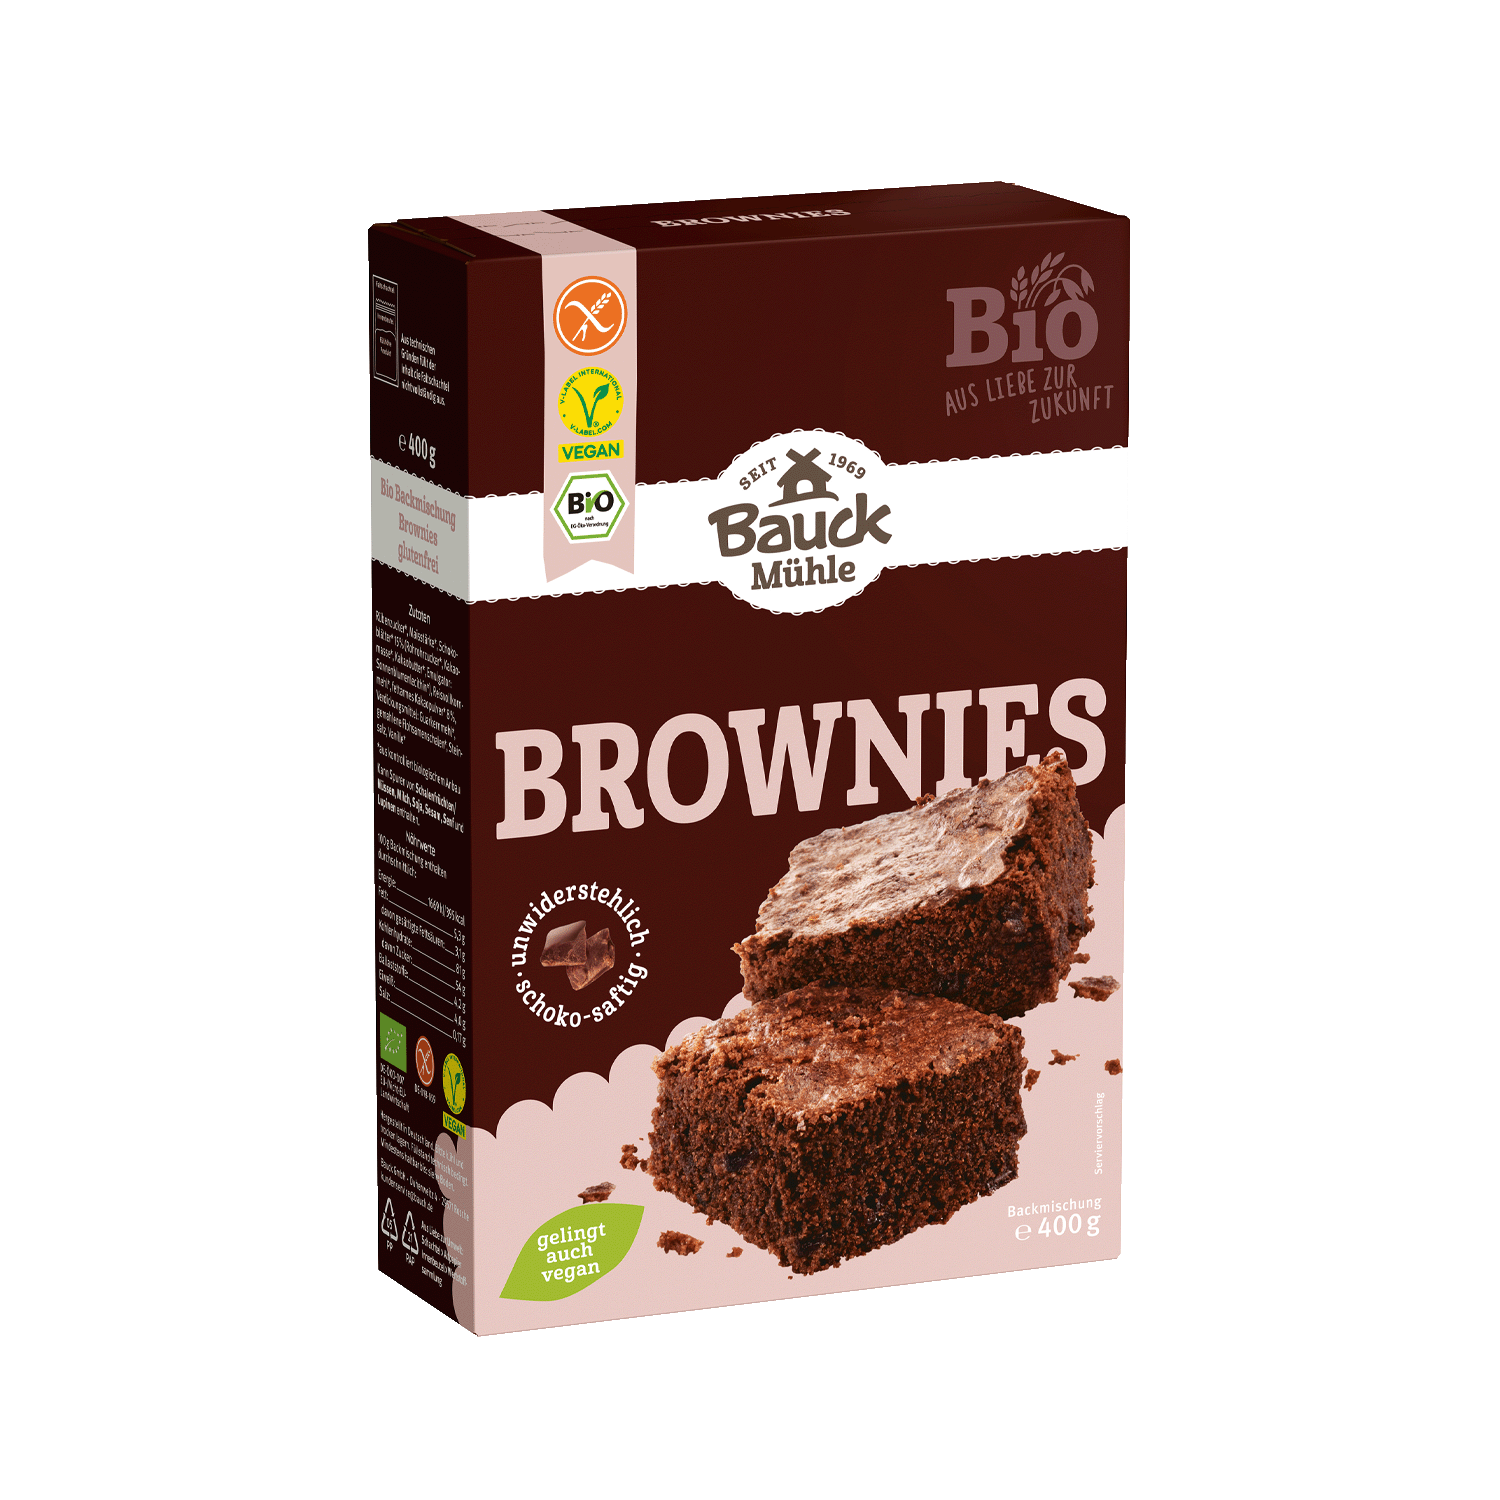 Brownies Backmischung, glutenfrei, BIO, 400g